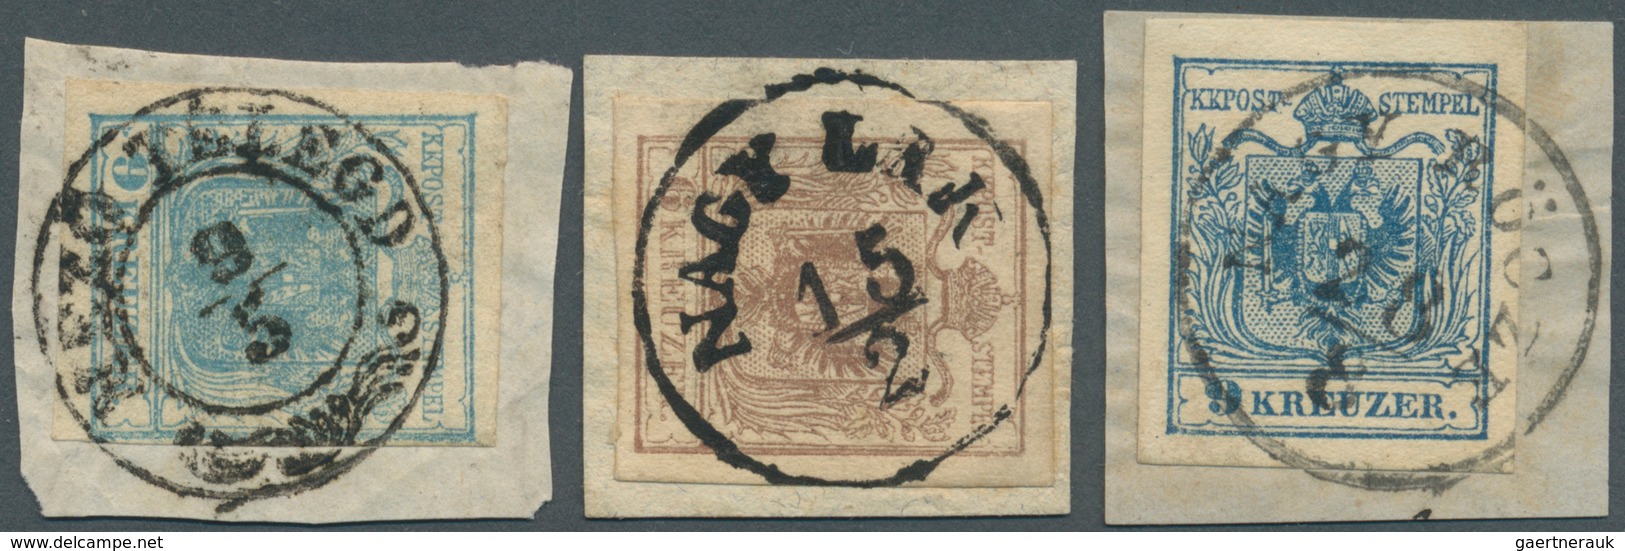 15728 Österreich - Stempel: 1850, "MEZÖ TELEGD" Zier-K2, "NAGY LAK" K1 Und "NAGY BÖSZK" Je Auf Briefstück - Maschinenstempel (EMA)